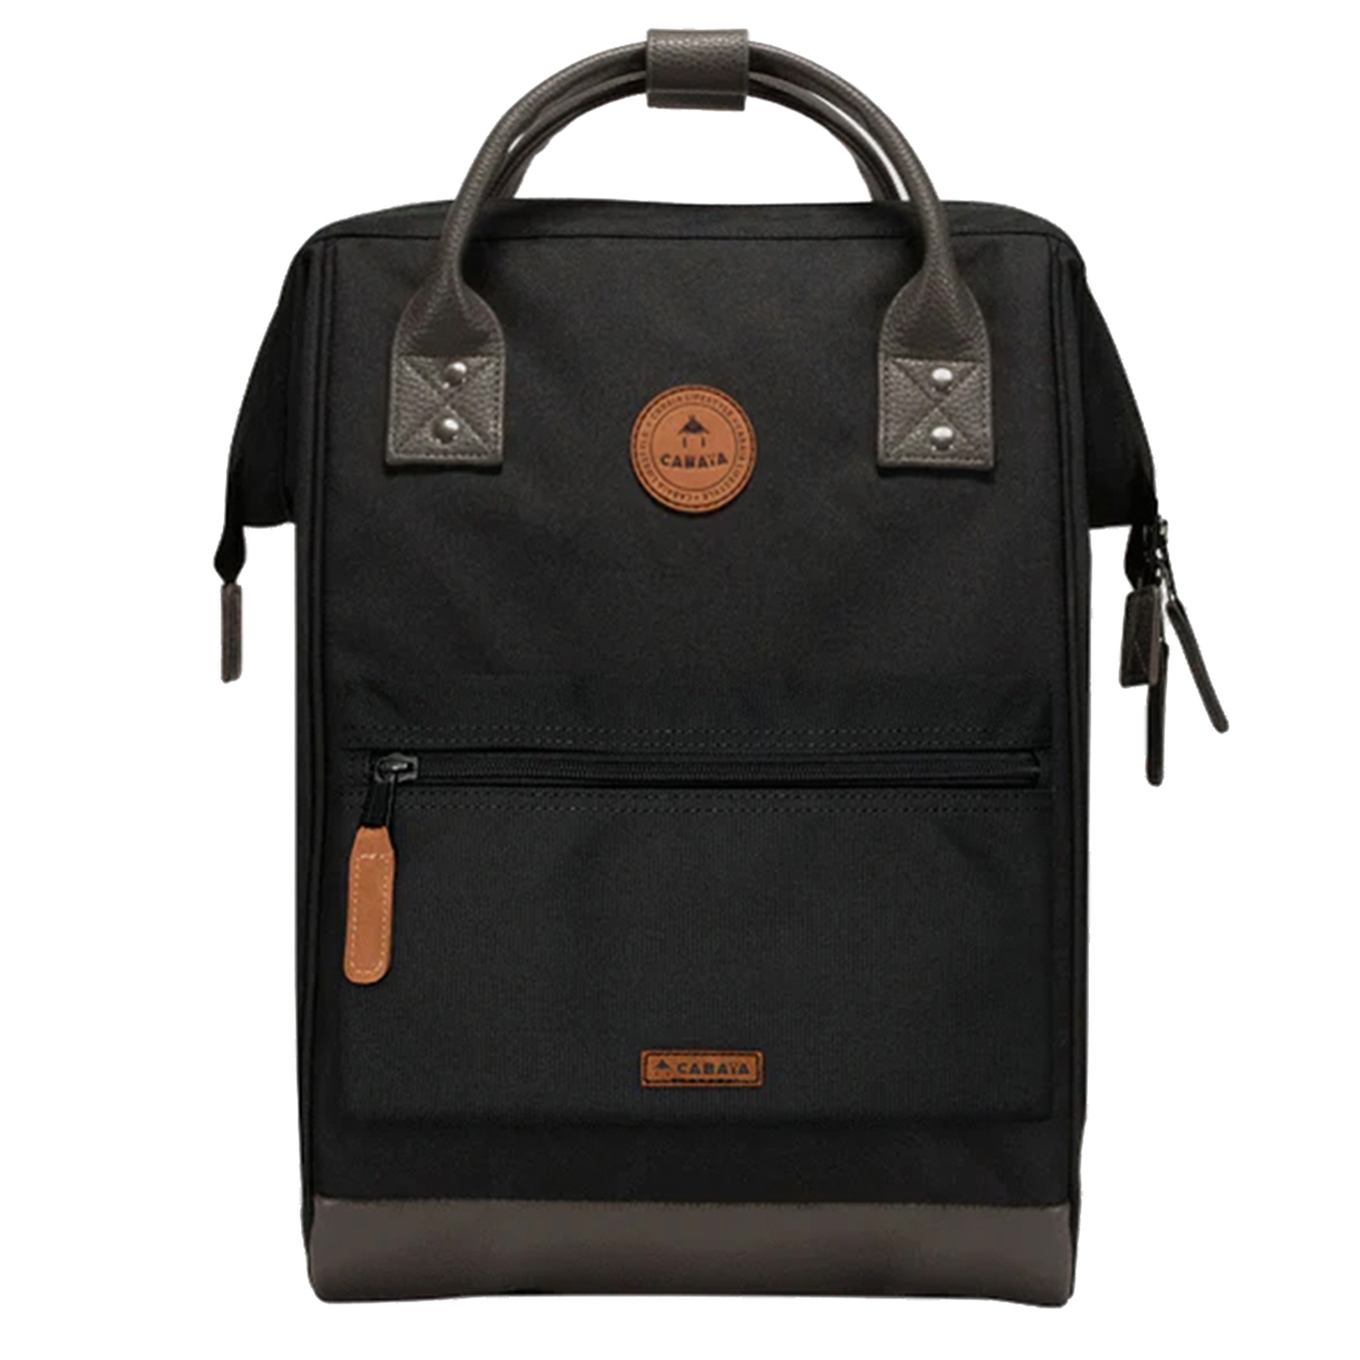 Cabaia Adventurer Medium Bag pekin backpack